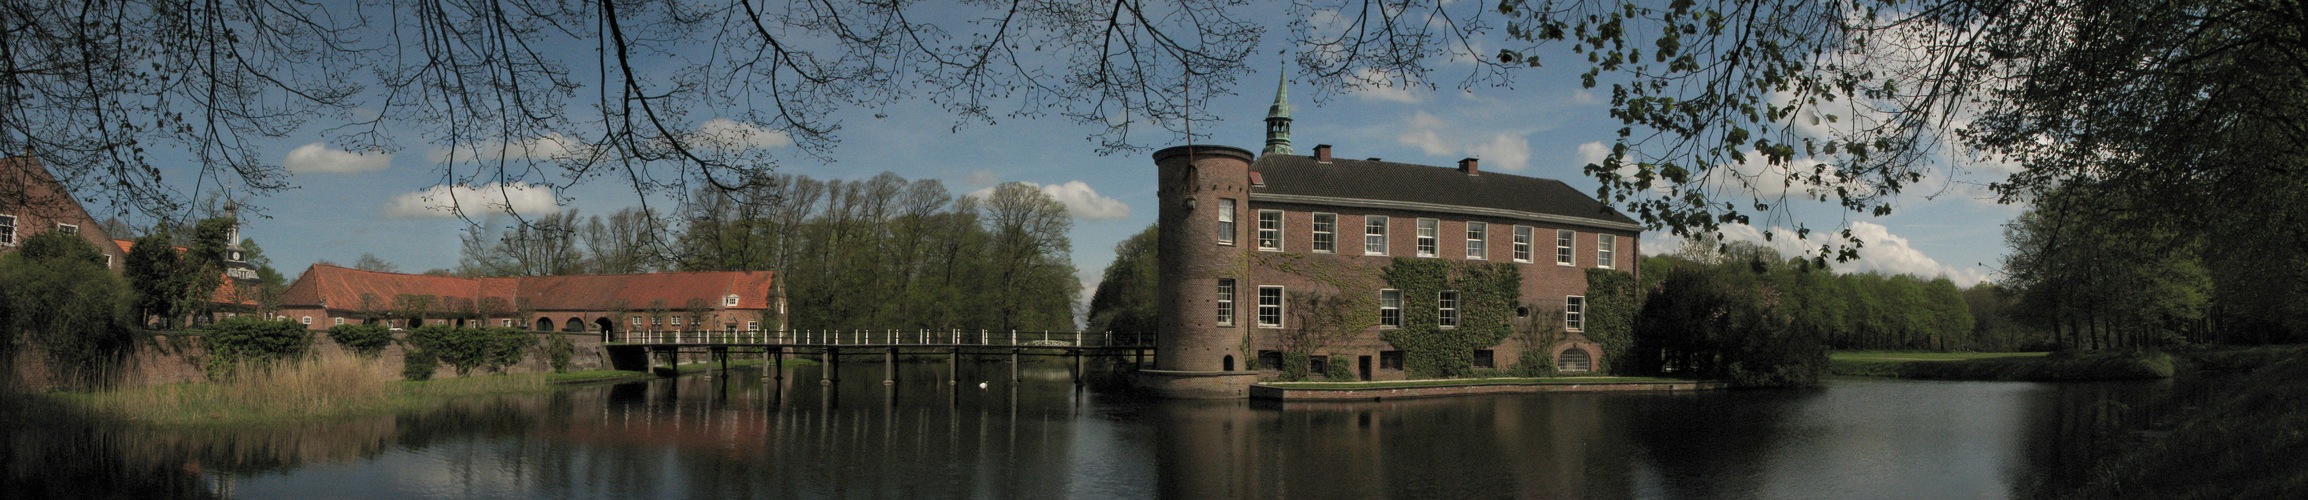 Castle Frisia